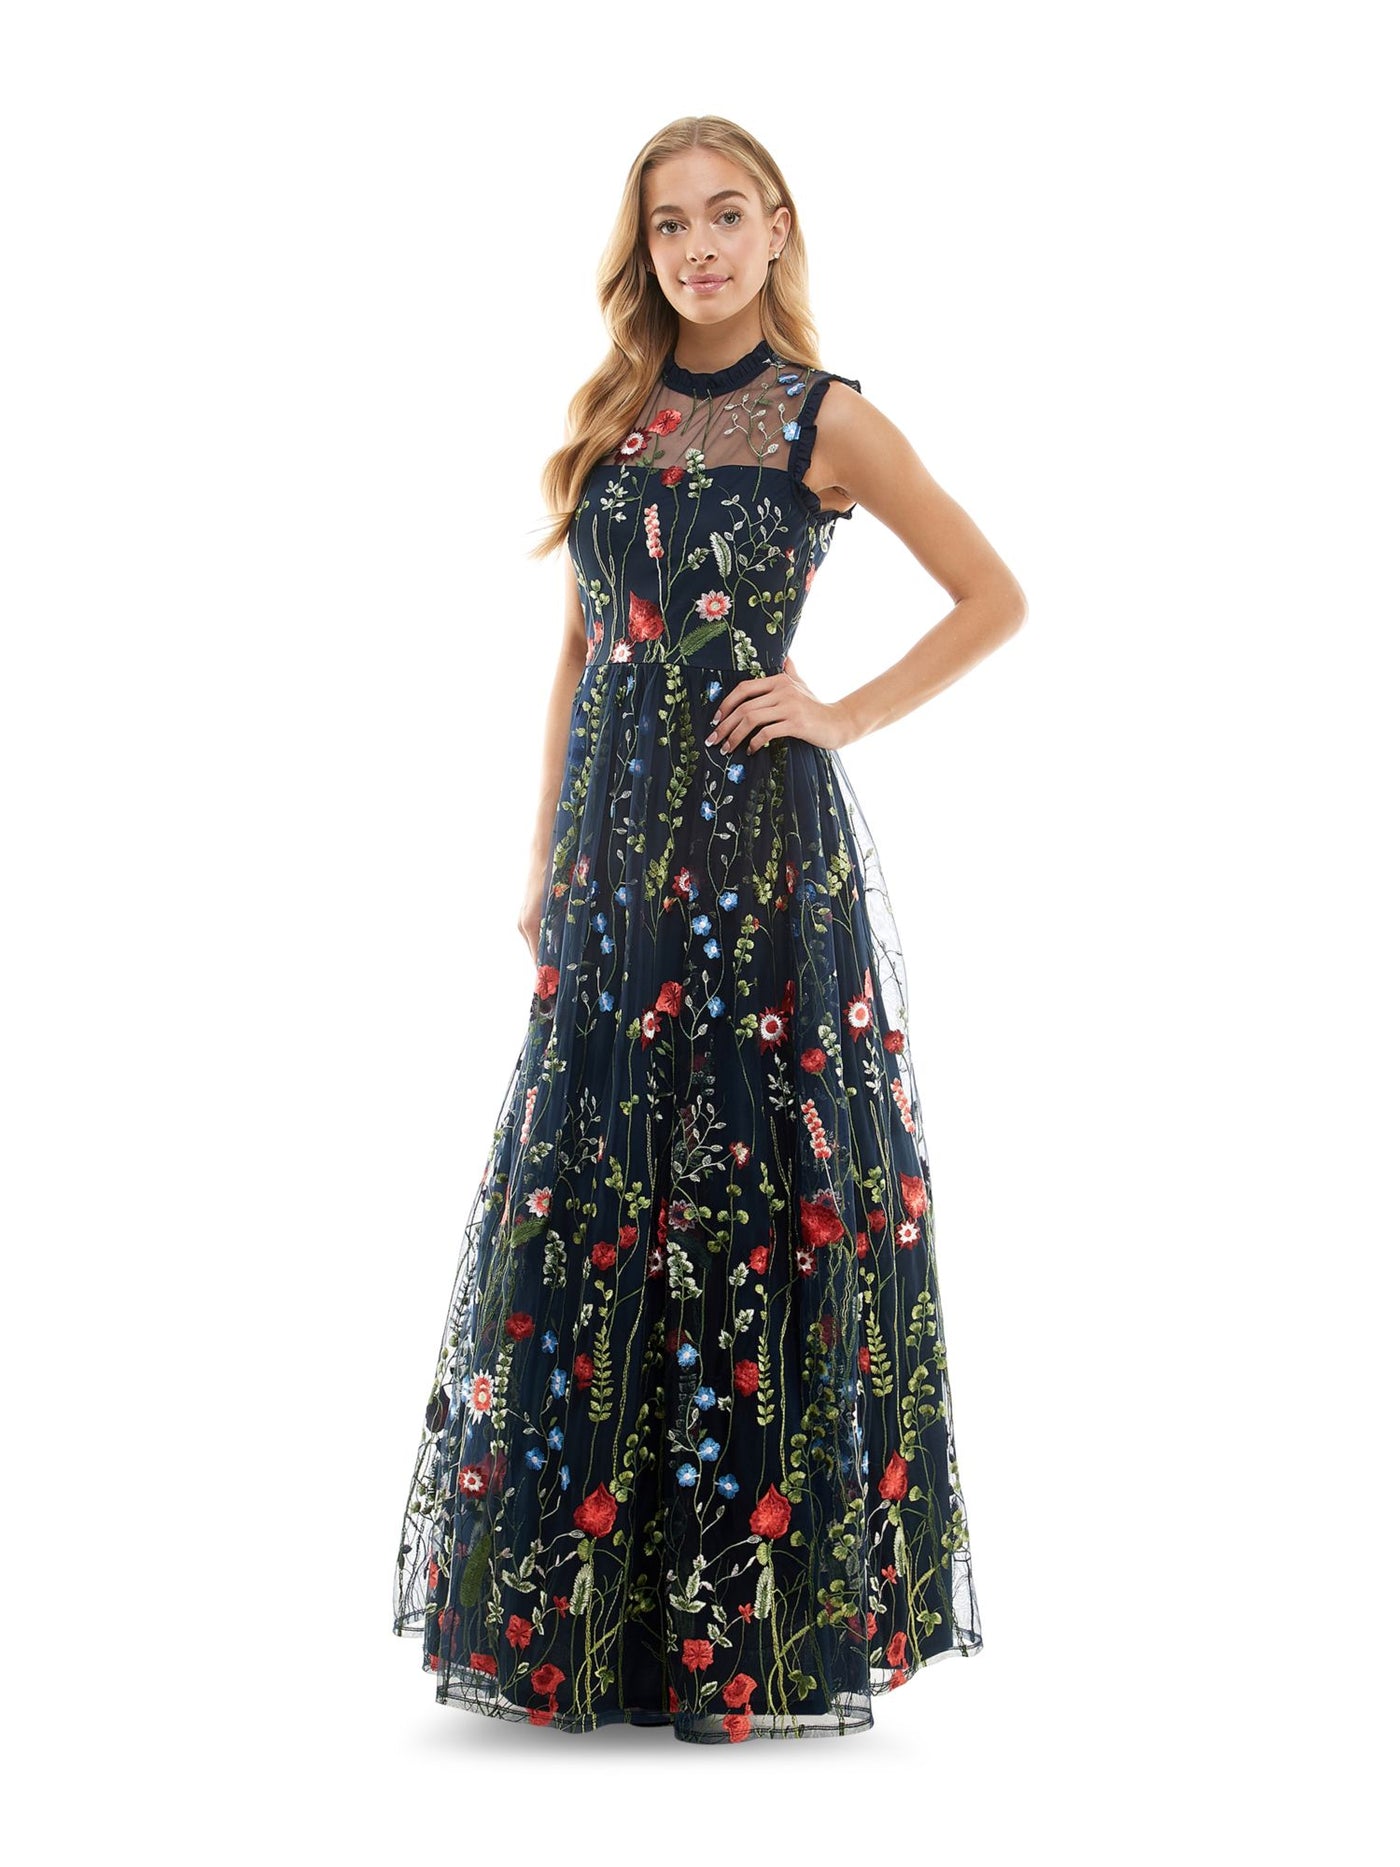 CITY STUDIO Womens Navy Embroidered Ruffled Trim Floral Sleeveless Illusion Neckline Full-Length Evening Dress Juniors 0